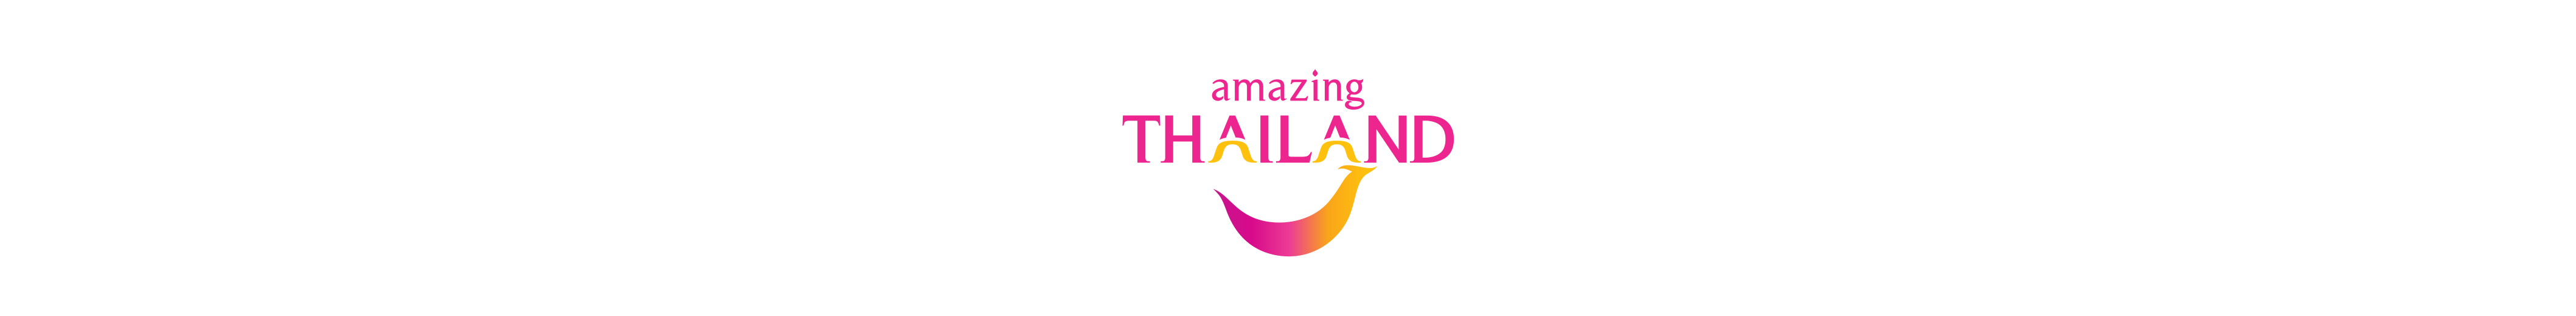 Thailand logo footer